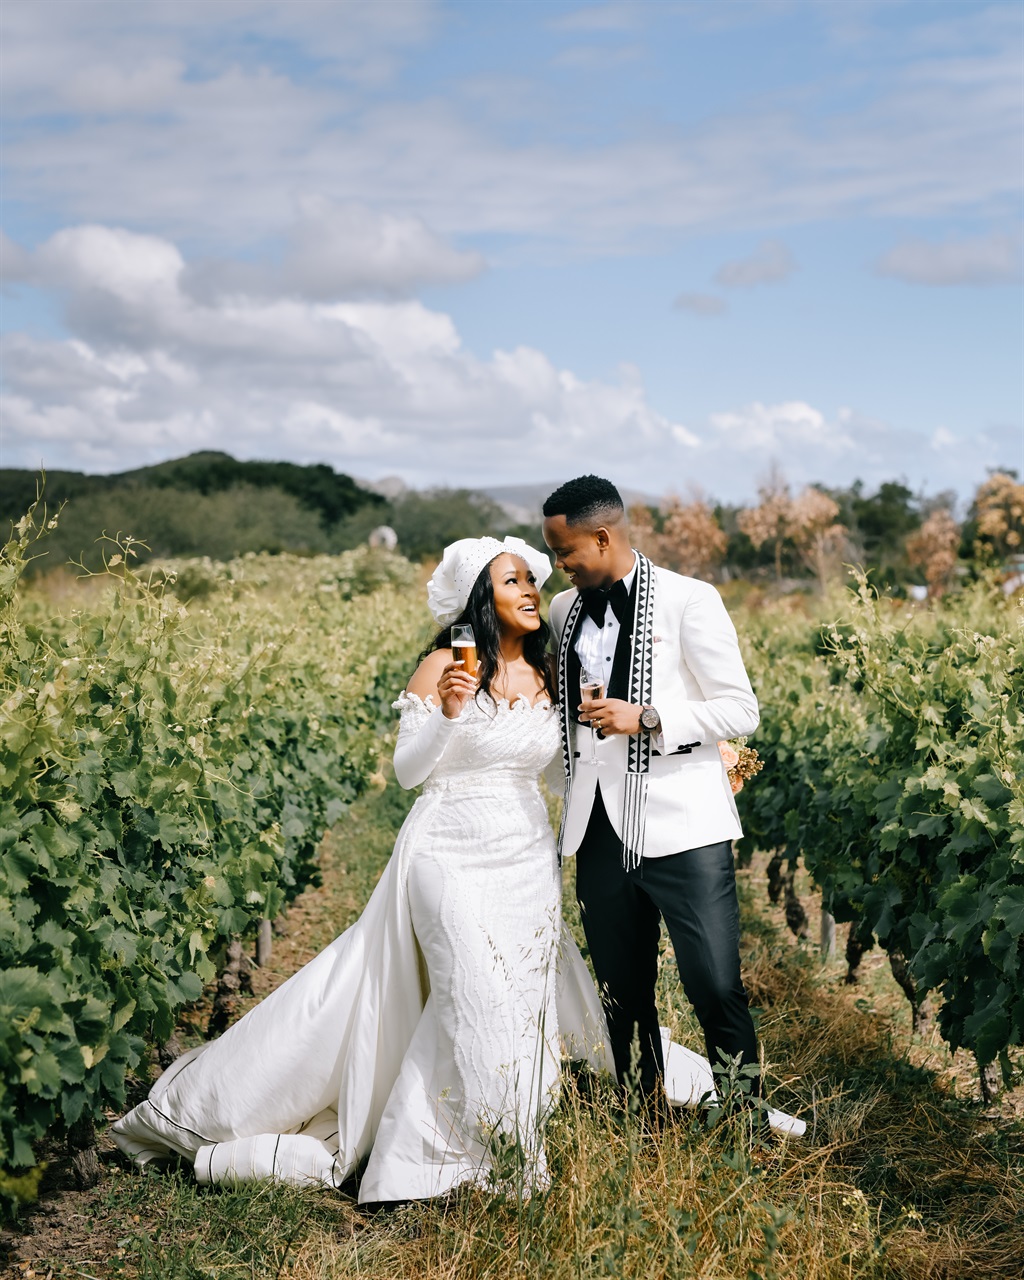 xhosa wedding, love, marriage, bride